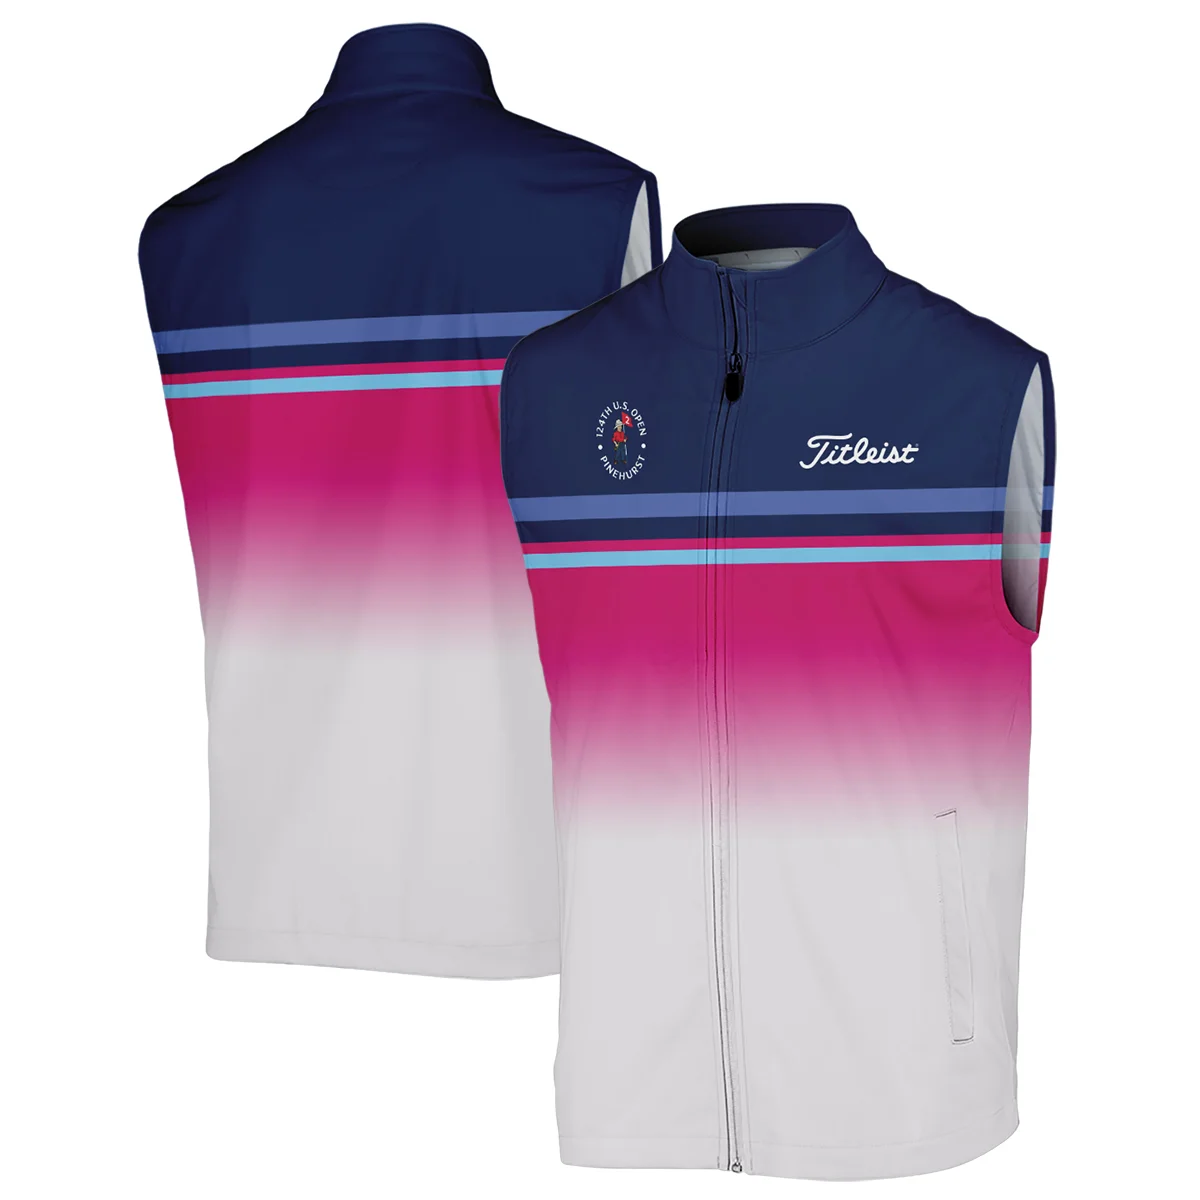 Sport Titleist 124th U.S. Open Pinehurst Sleeveless Jacket White Strong Pink Very Dark Blue Pattern  All Over Print Sleeveless Jacket